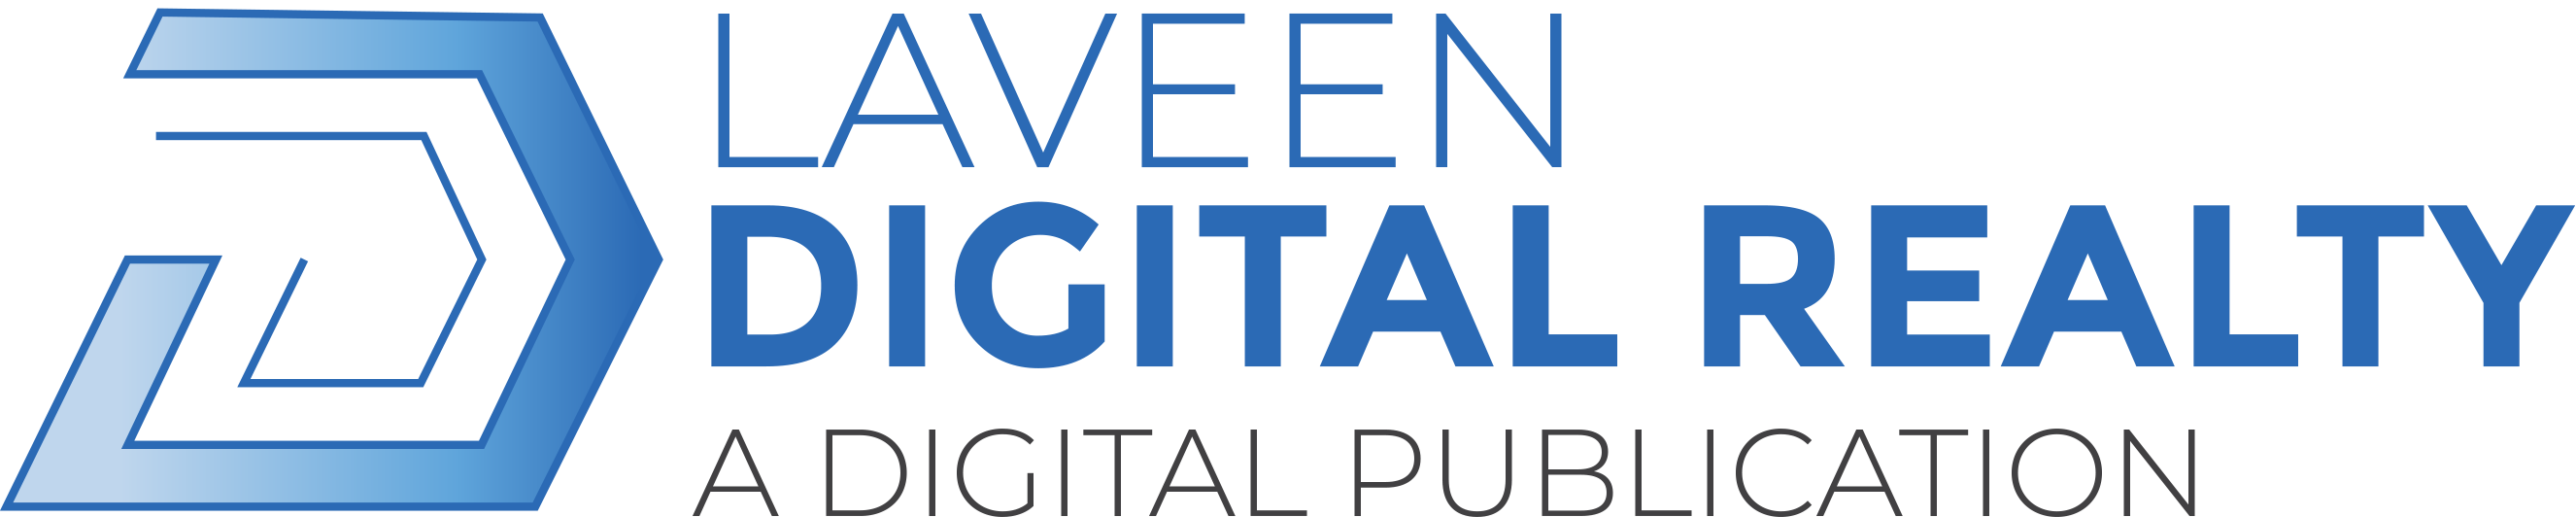 Laveen Digital Realty Logo